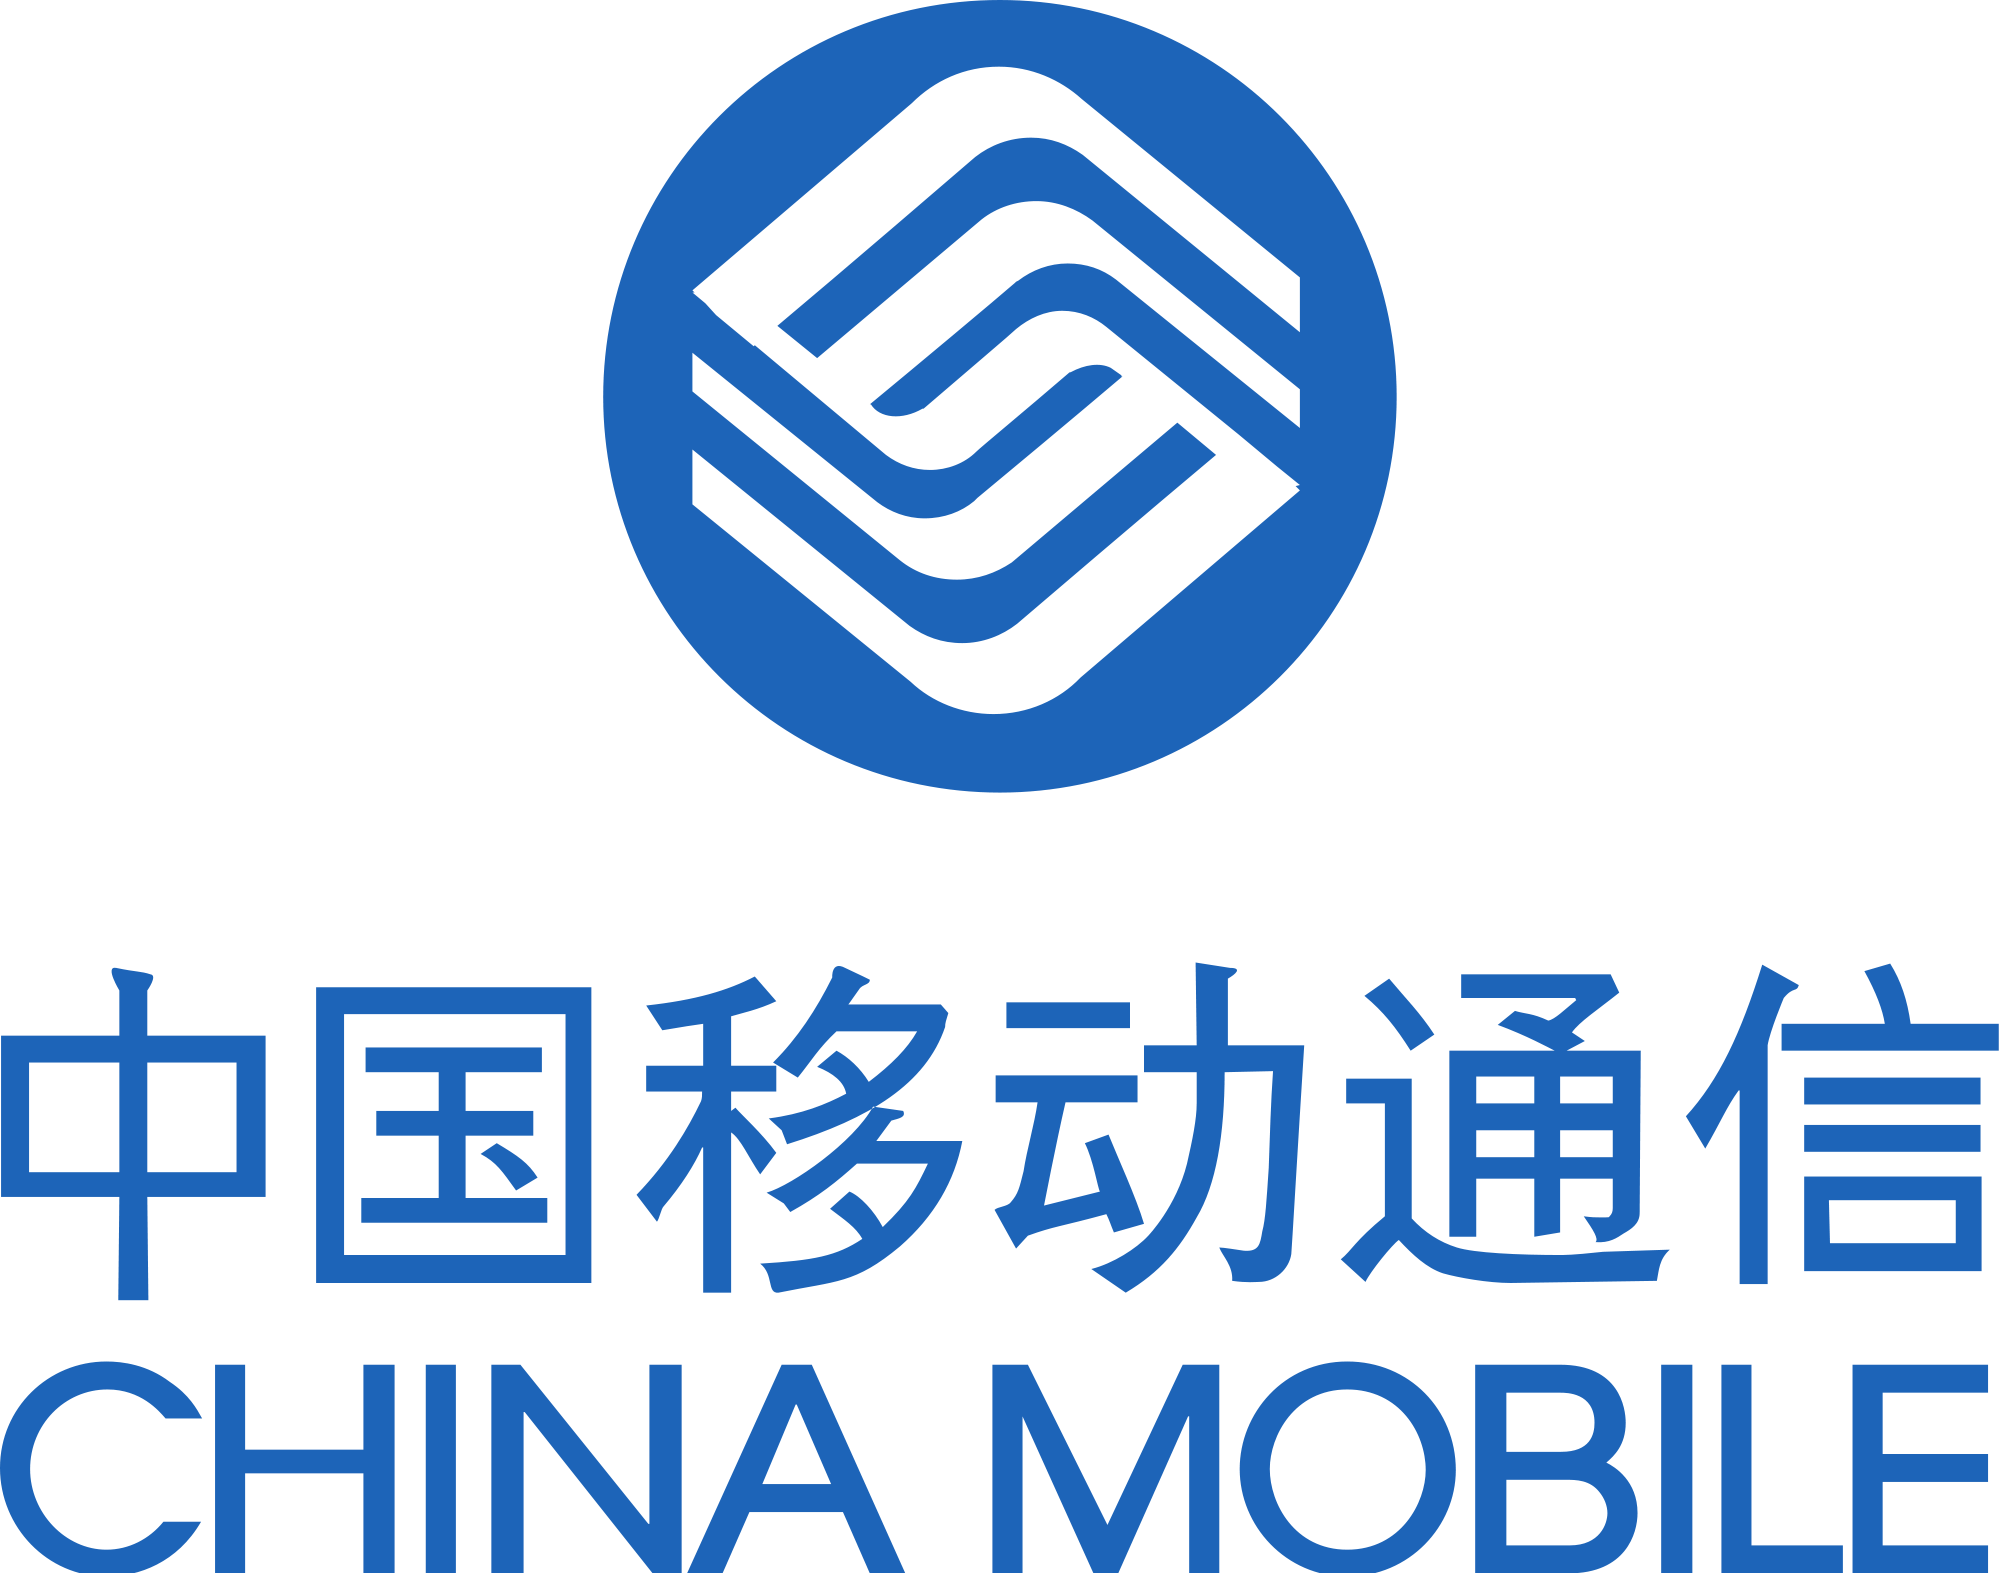 China Mobile Logo PNG - 32494